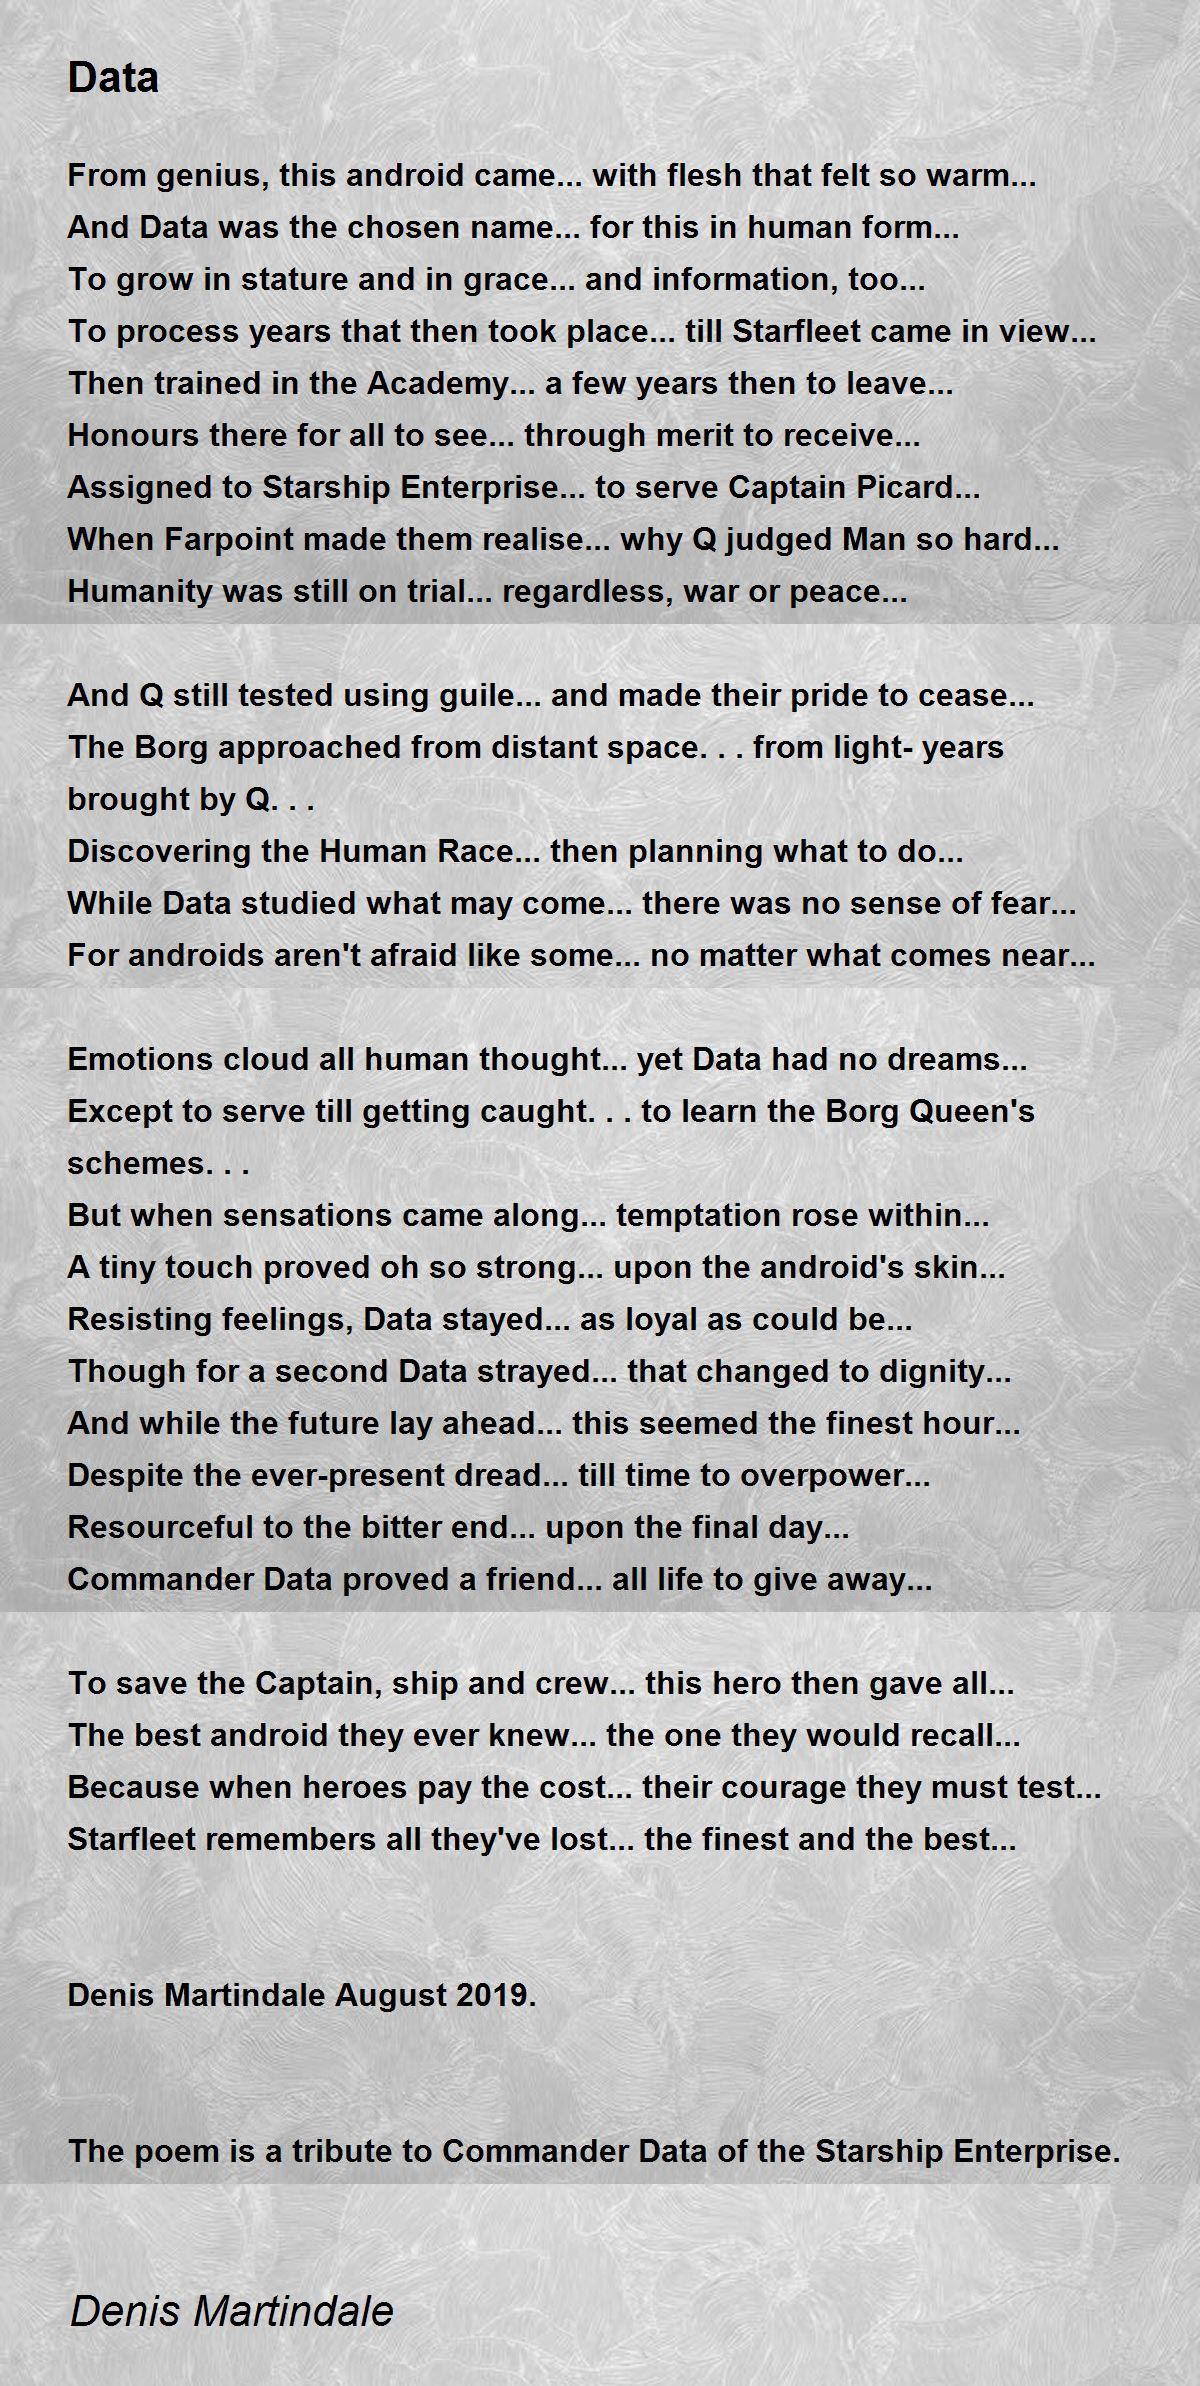 Data - Data Poem by Denis Martindale